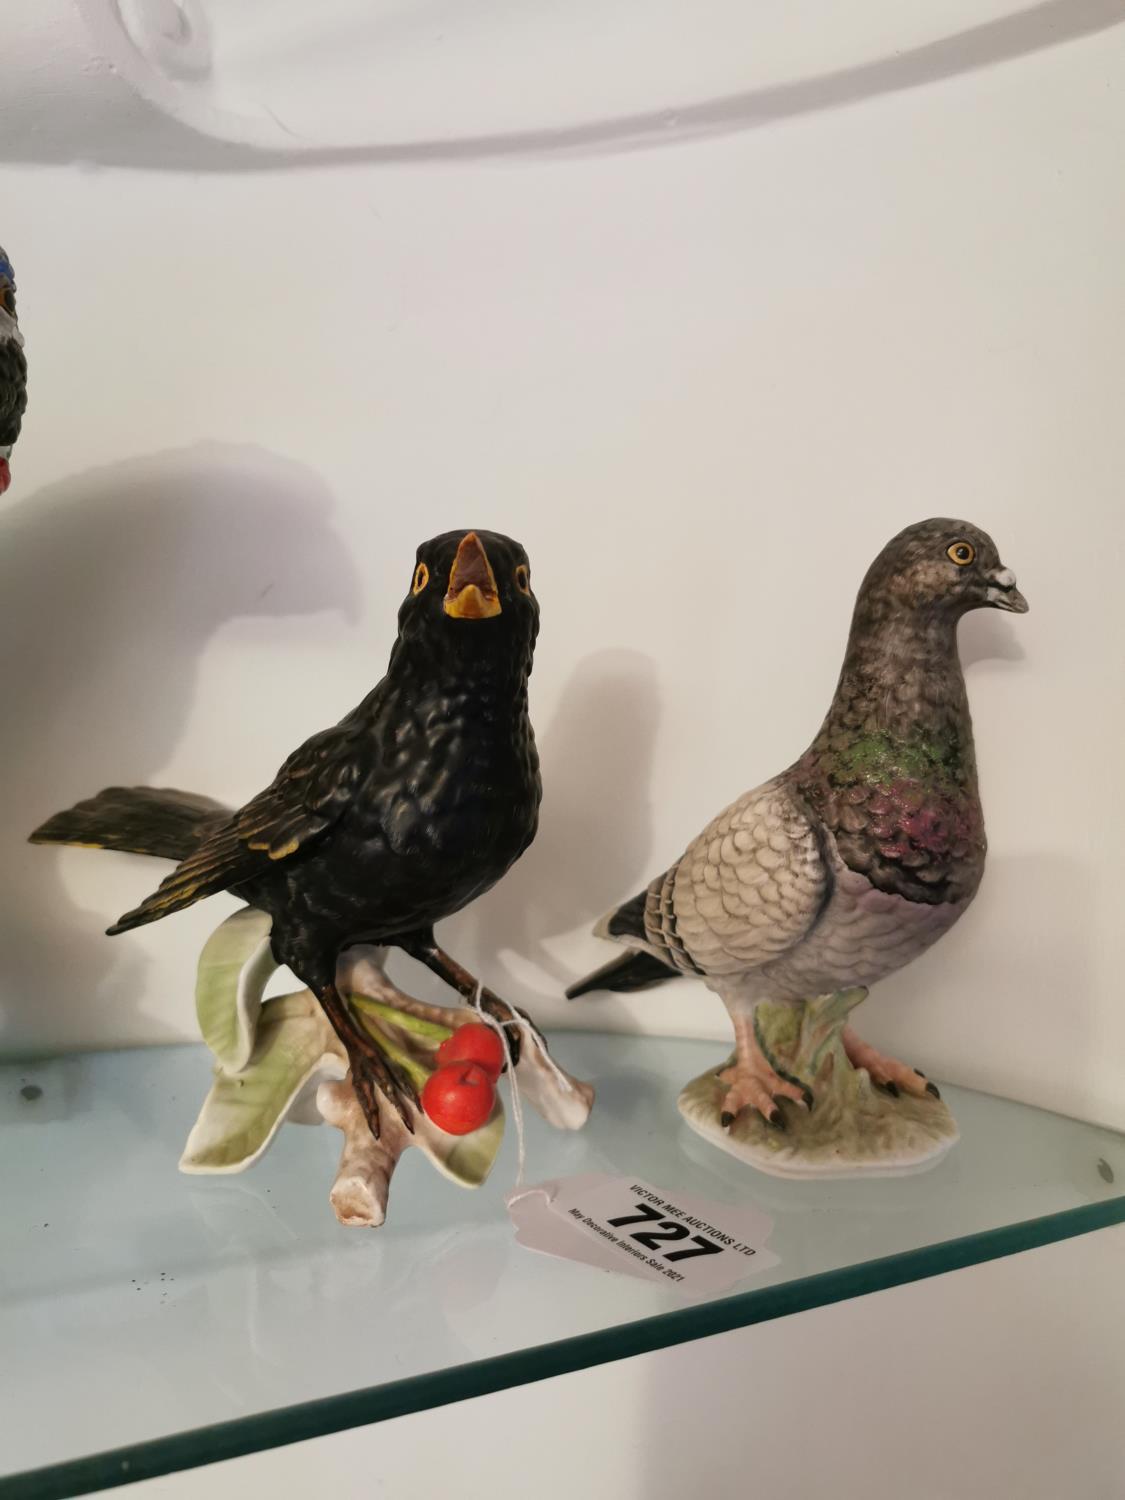 Two Goebel ceramic birds